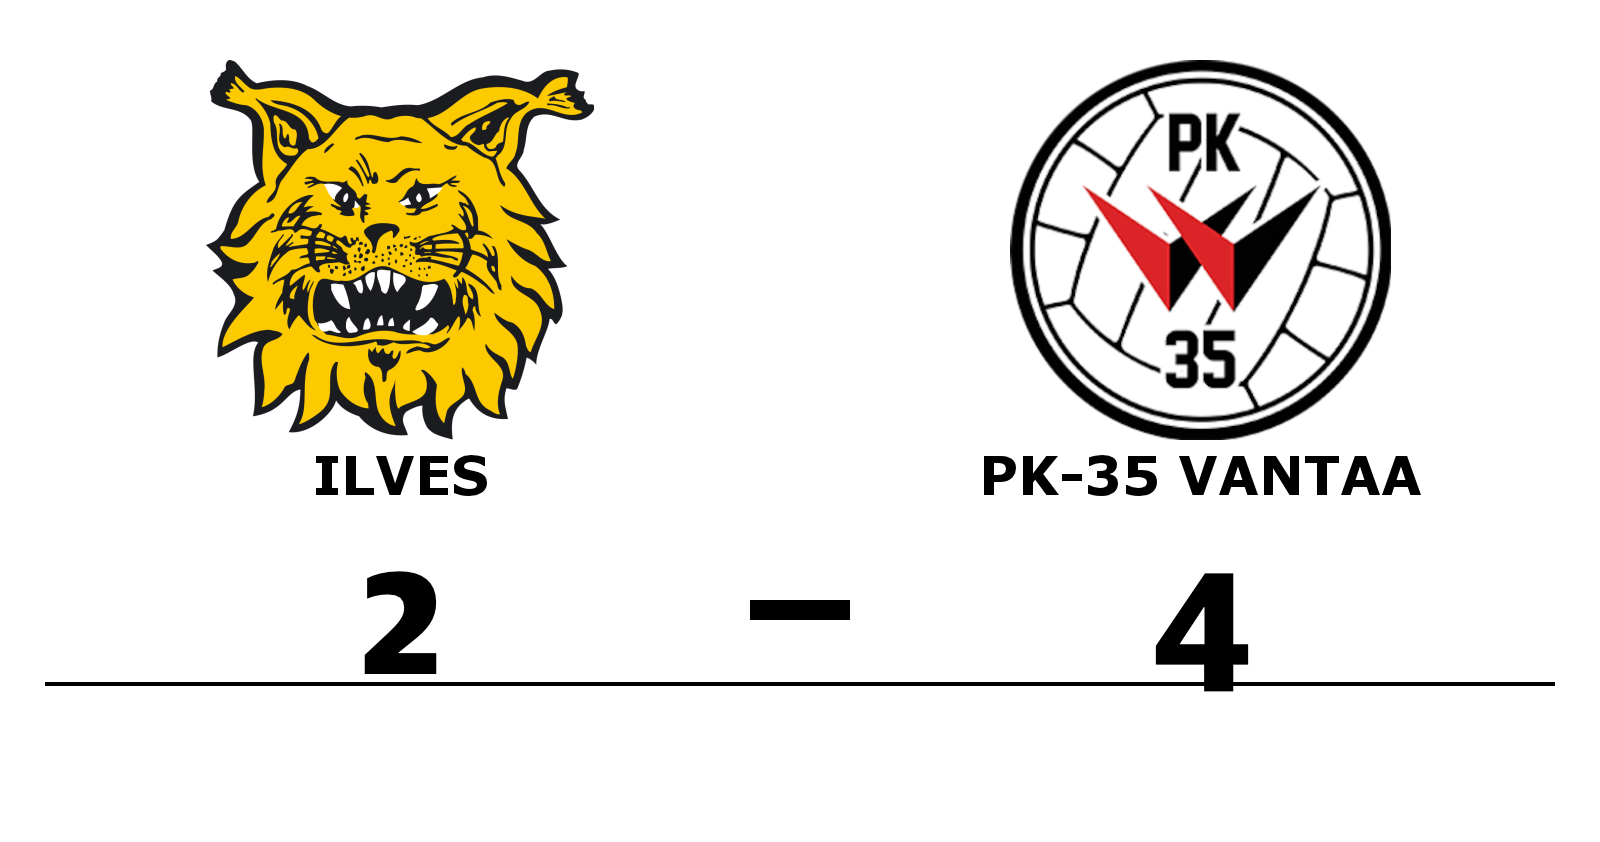 Ilves förlorade mot PK-35 Vantaa